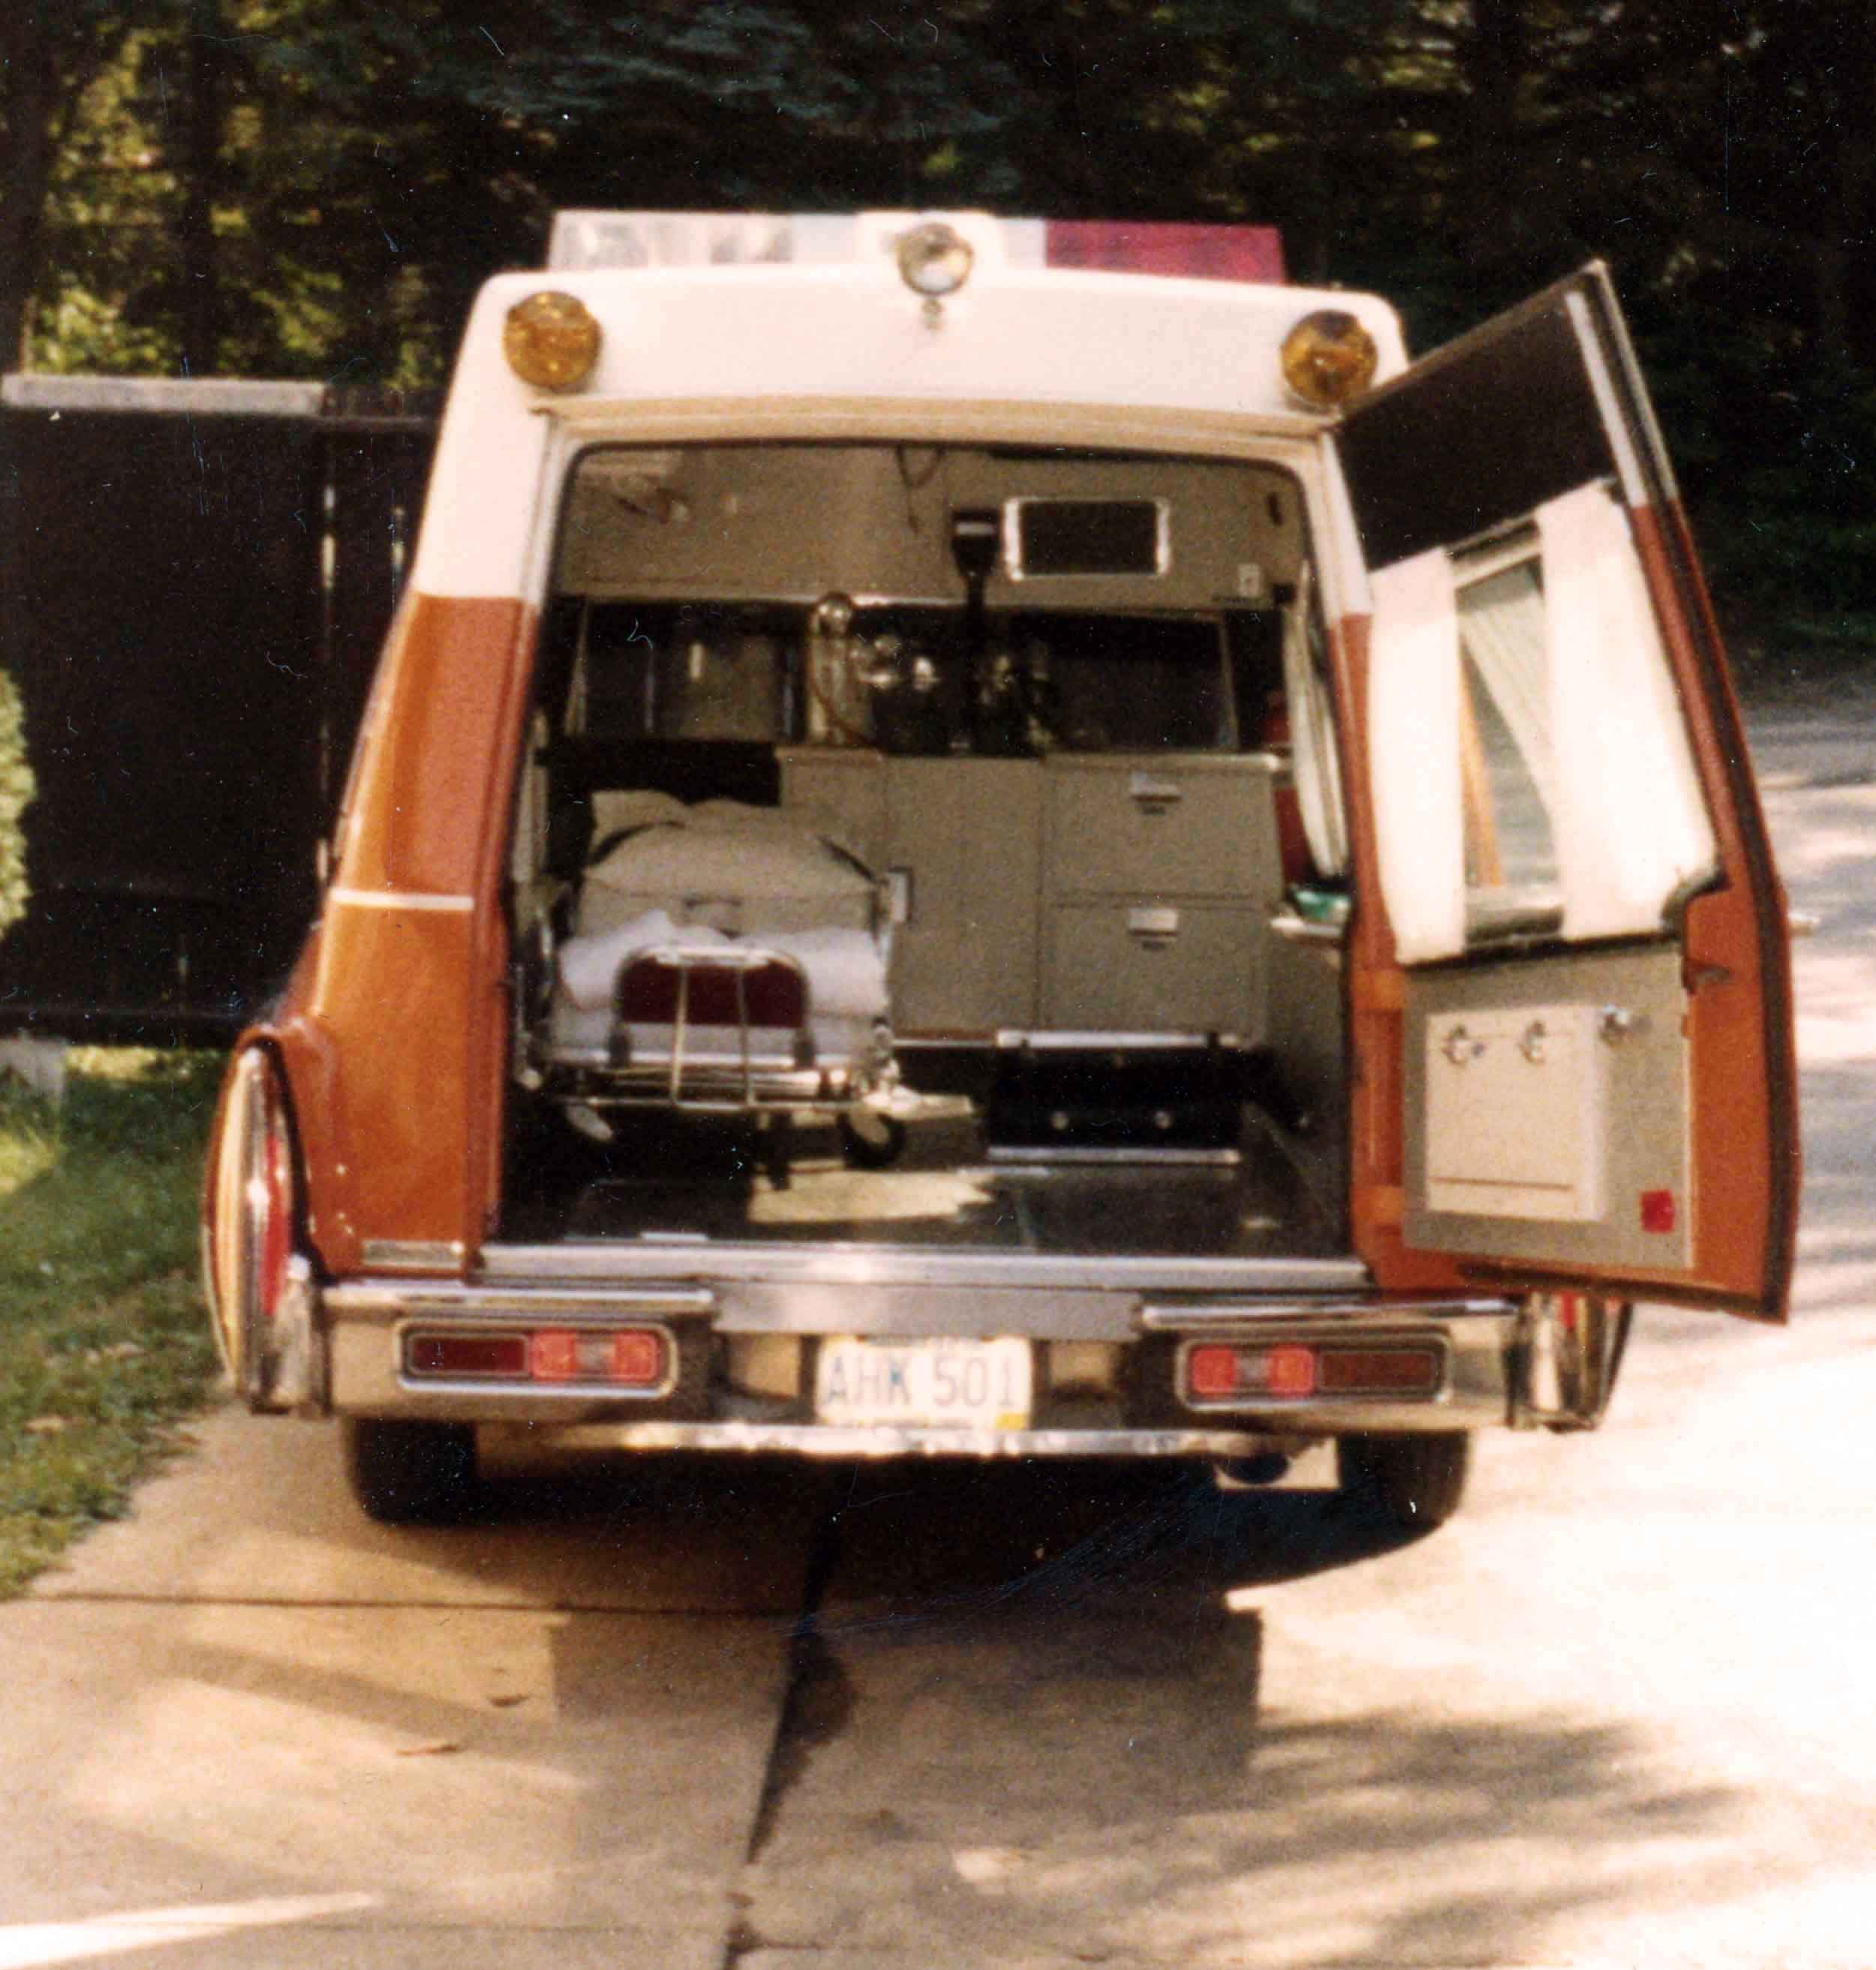 A look inside Stillwater Ambulance 802